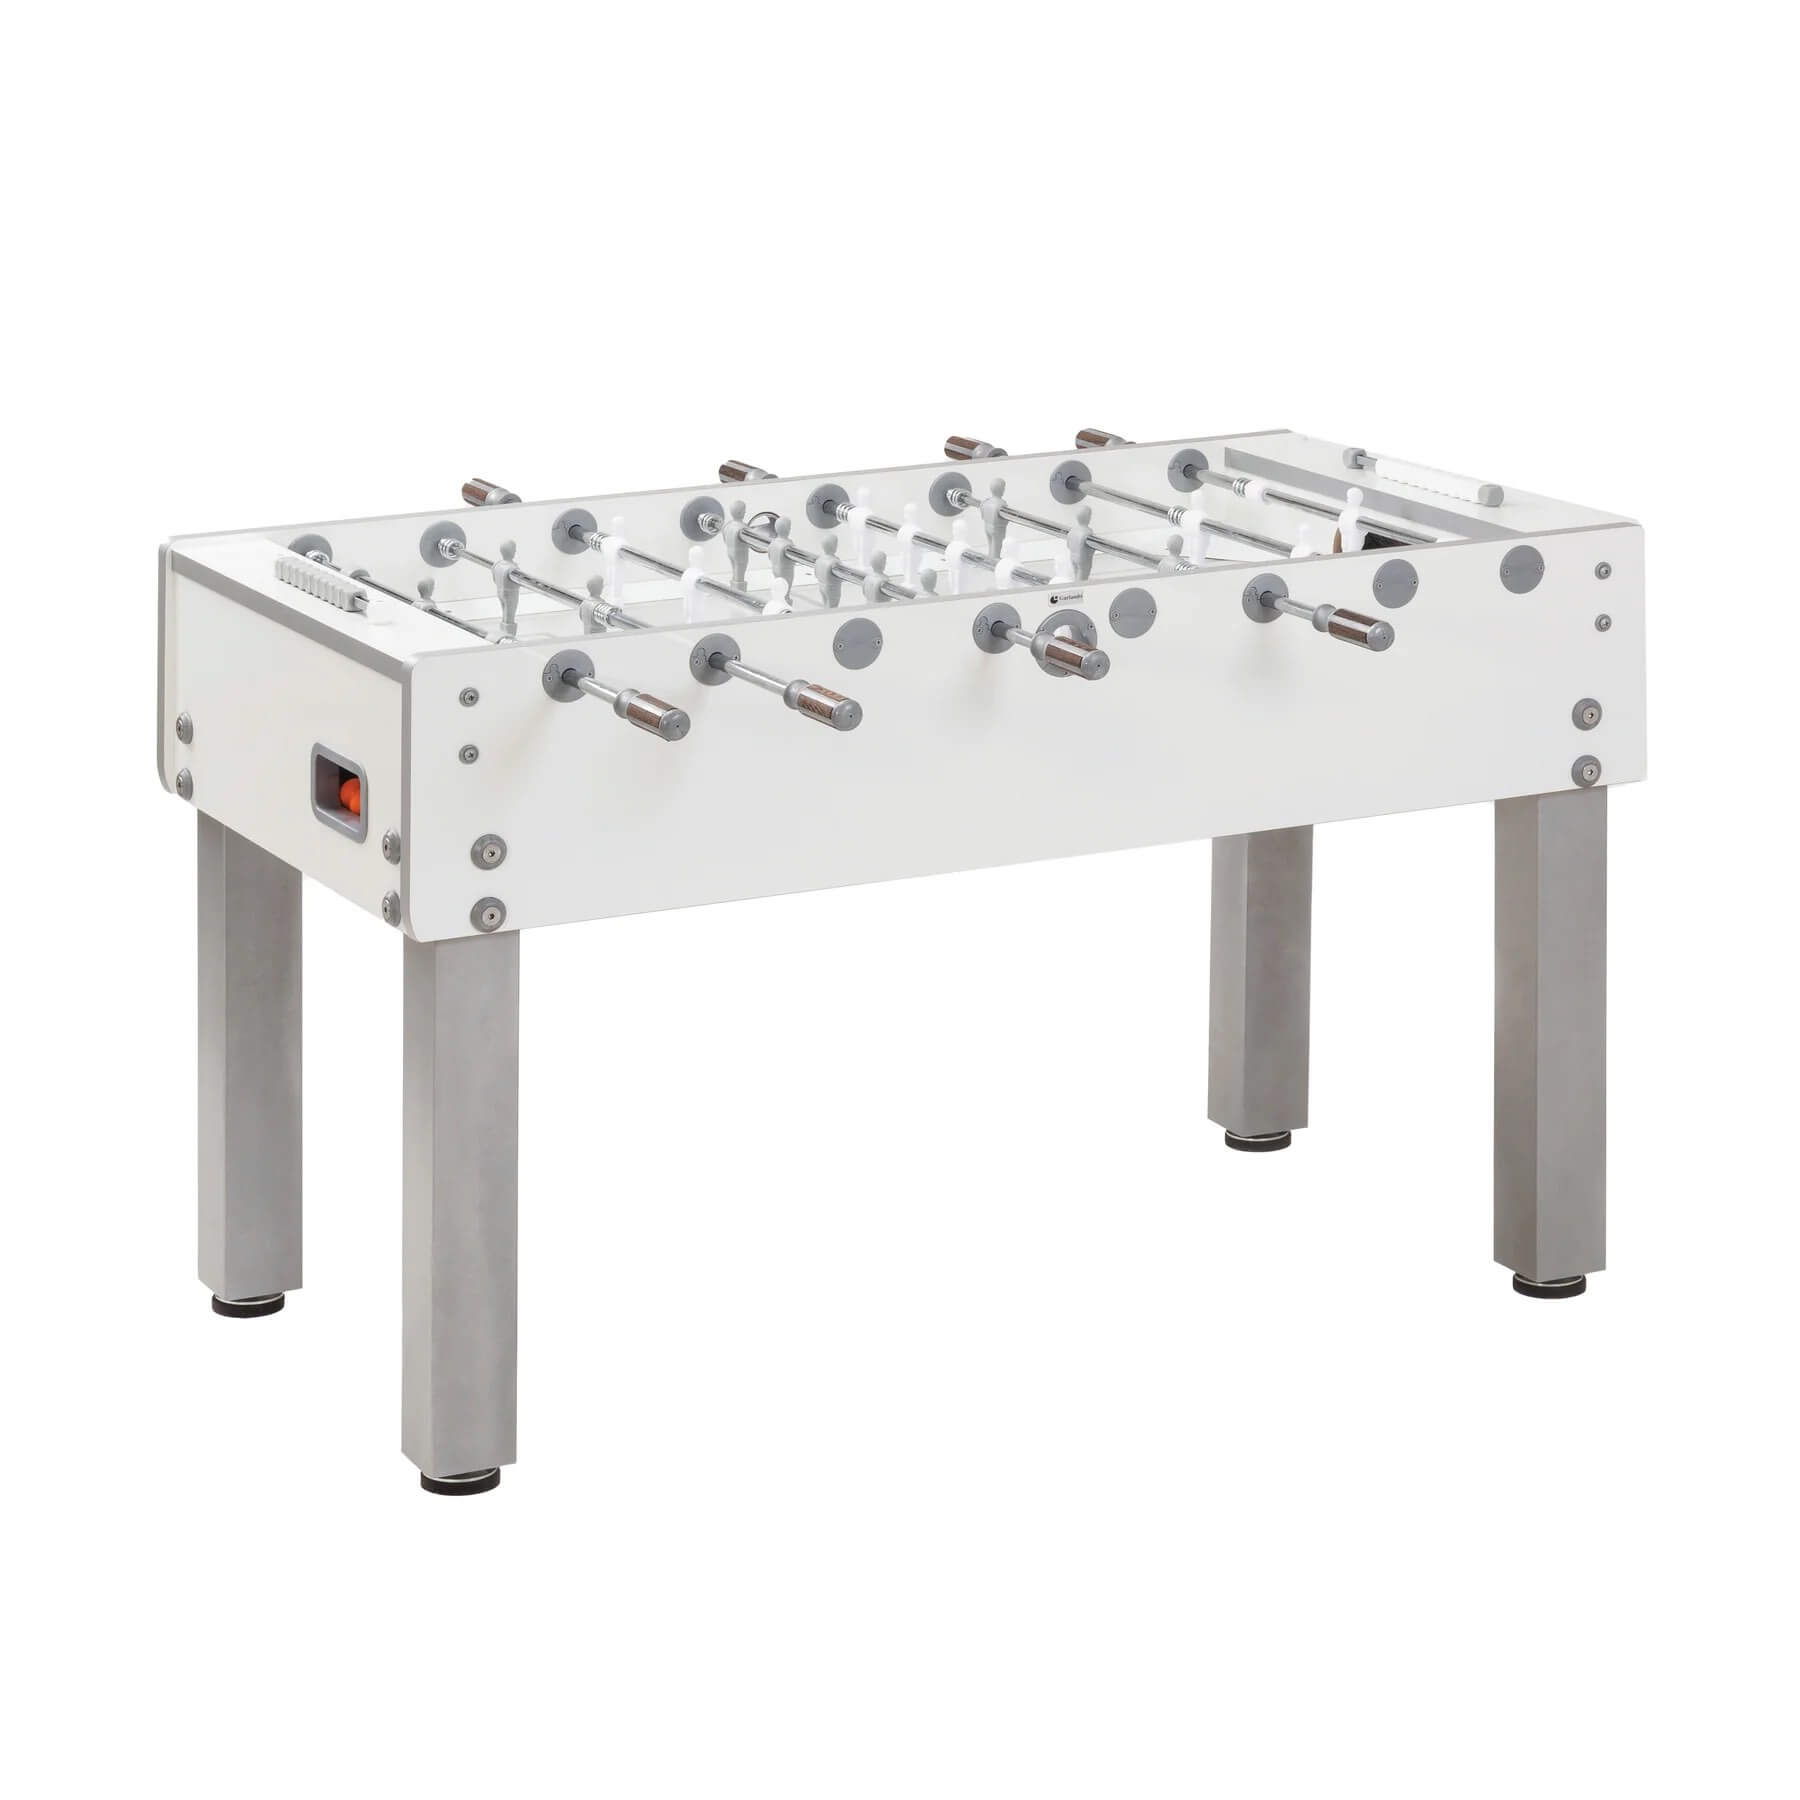 Garlando (G-500 WHITE) Indoor Foosball Table, Made In Italy